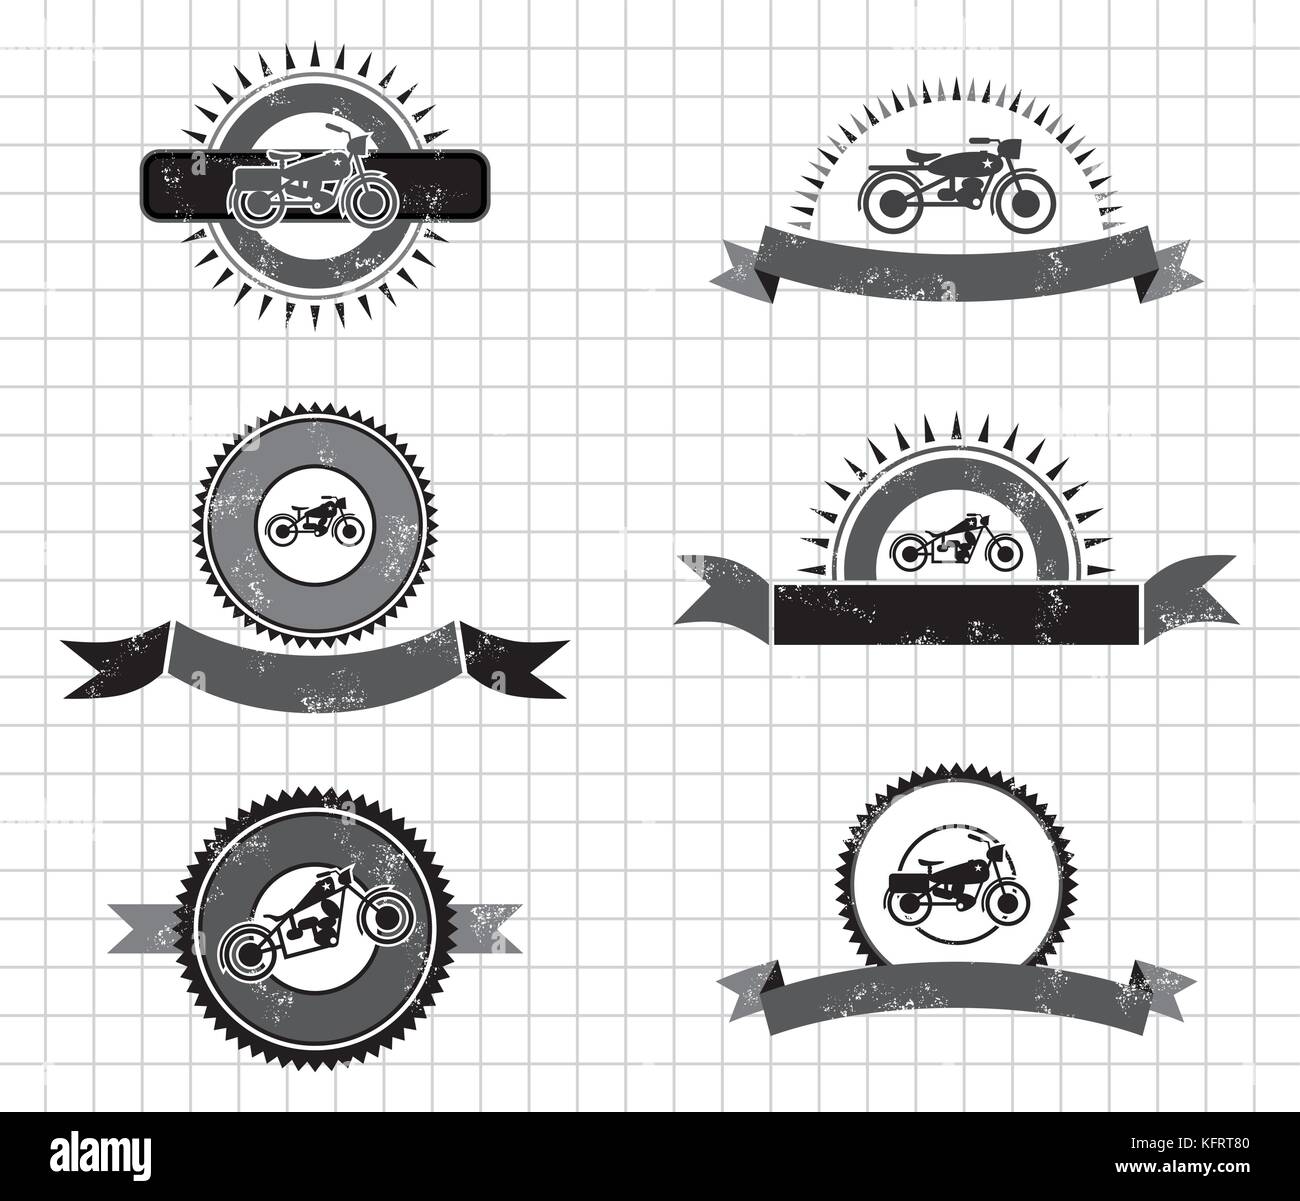 editable chopper motorcycle vector graphic art design illustration Stock Vector